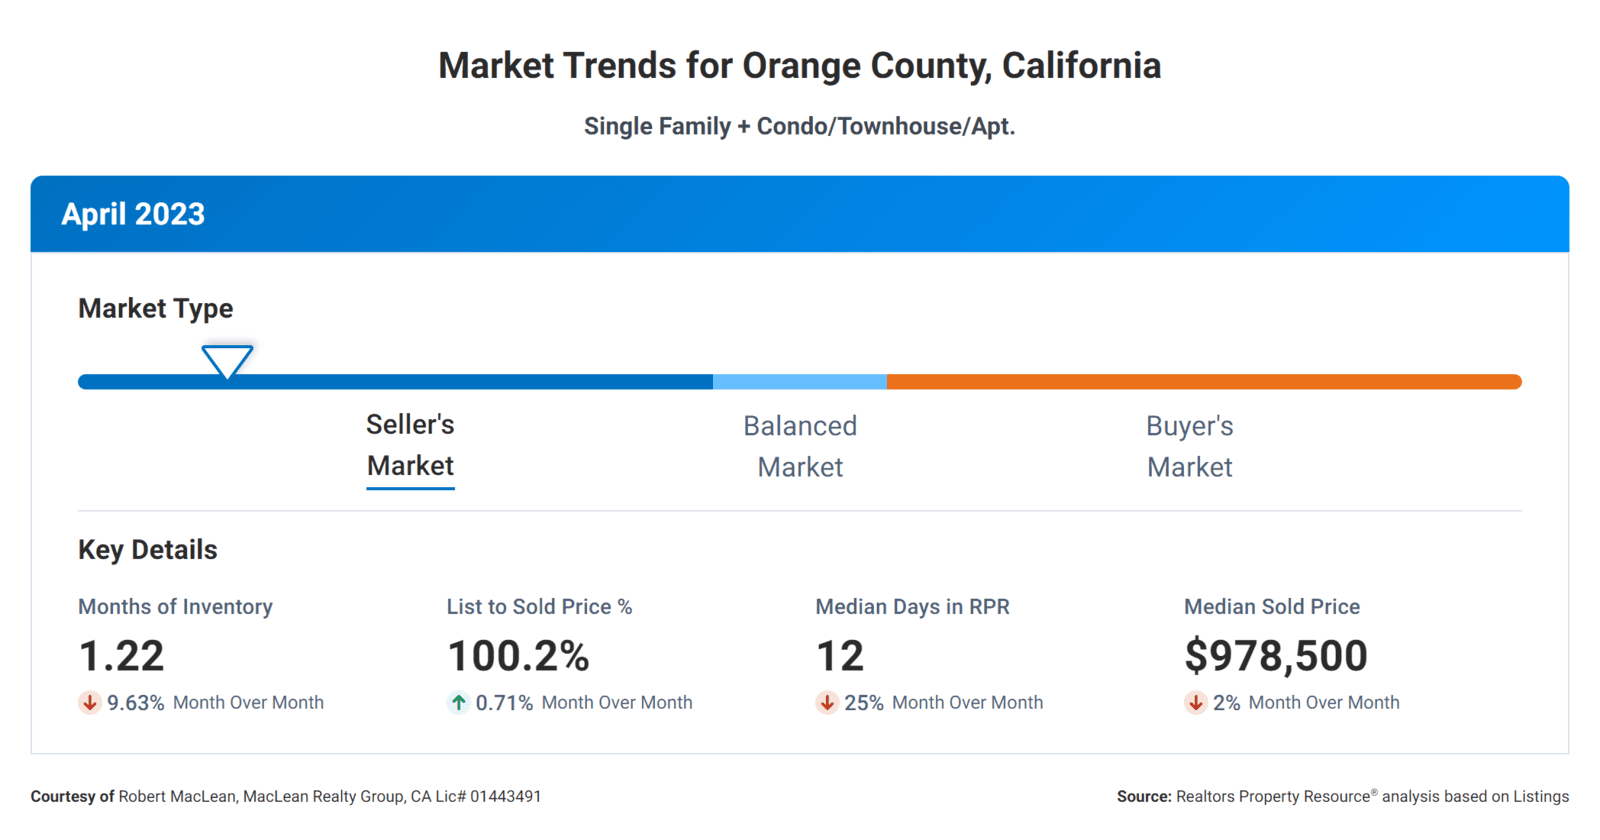 Market Trends for Orange County